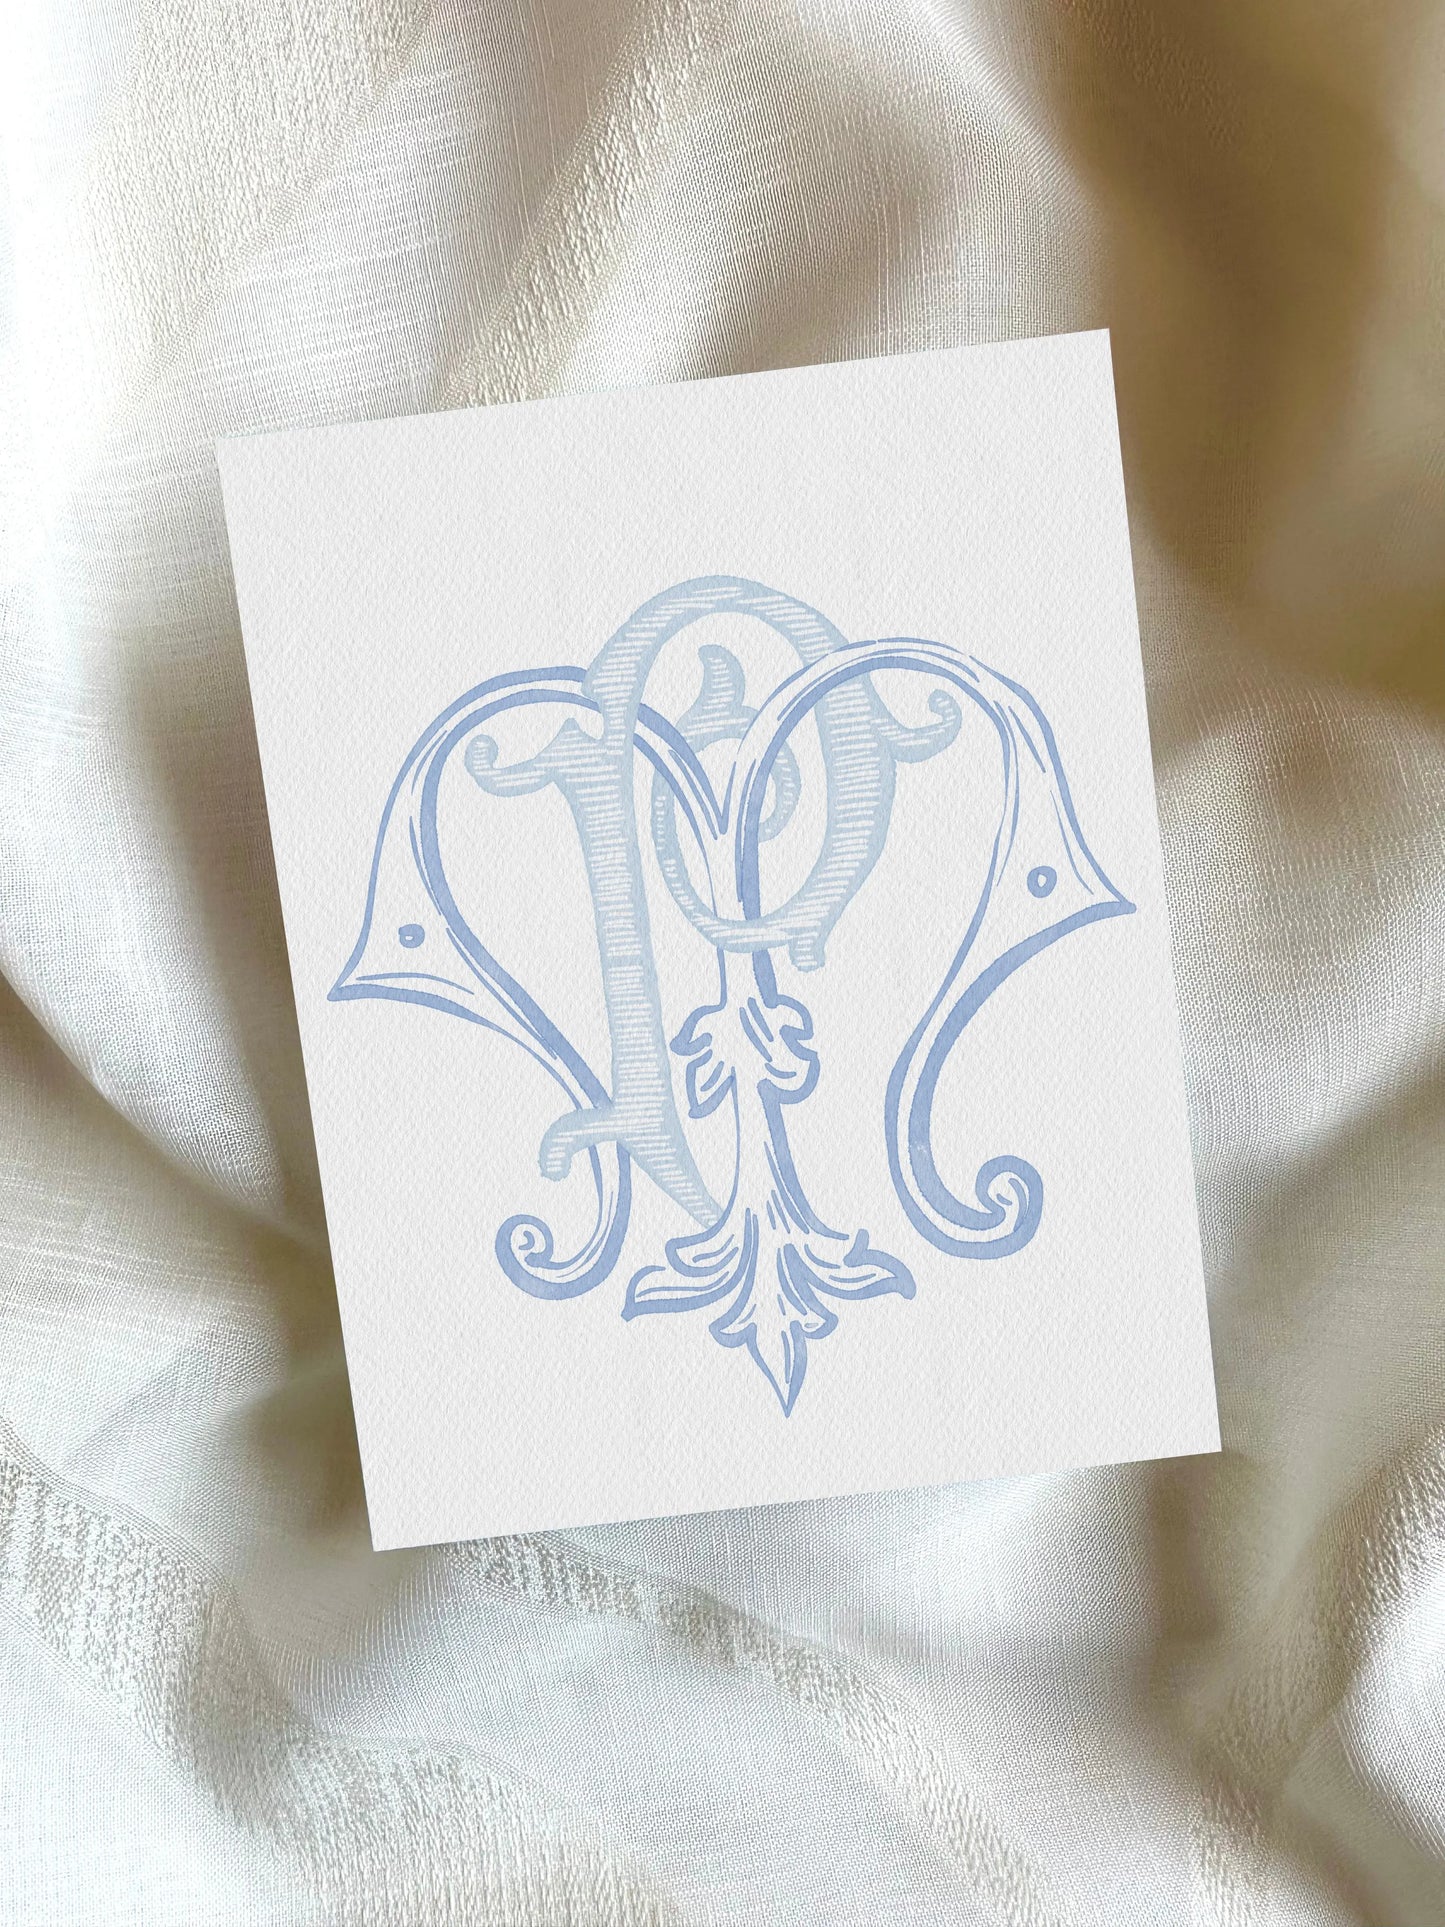 2 Letter Monogram with Letters MP | Digital Download - Wedding Monogram SVG, Personal Logo, Wedding Logo for Wedding Invitations The Wedding Crest Lab